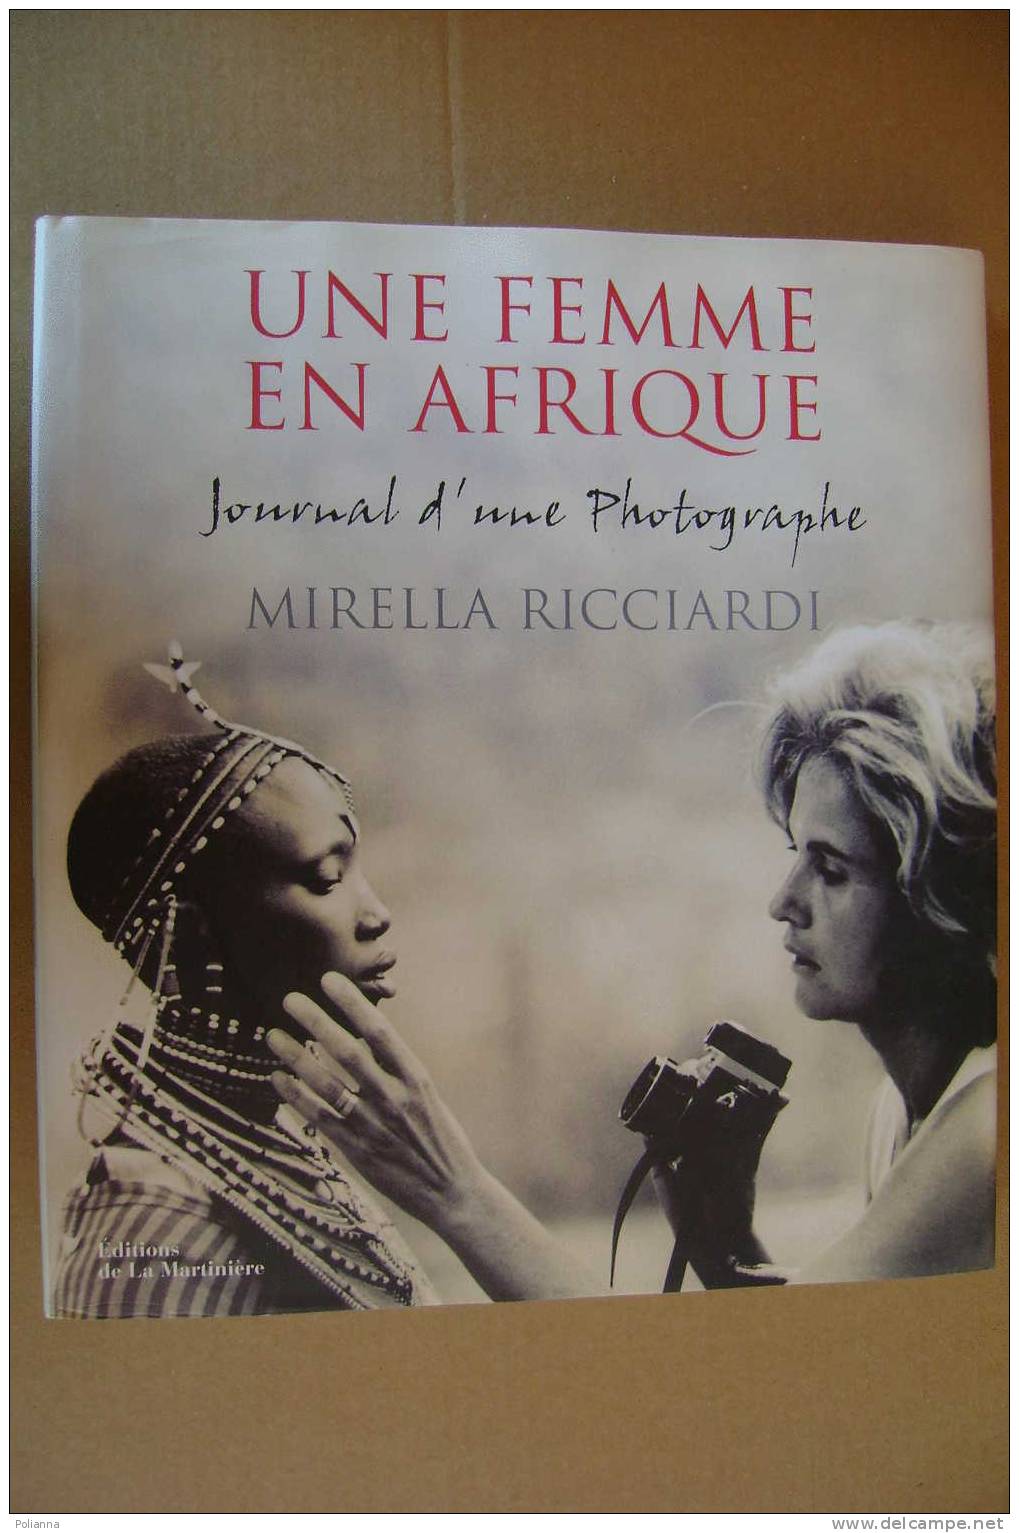 PAL/1 UNE FEMME EN AFRIQUE - MIRELLA RICCIARDI La Martiniere 2001 / Fotografia/DONNA - Foto